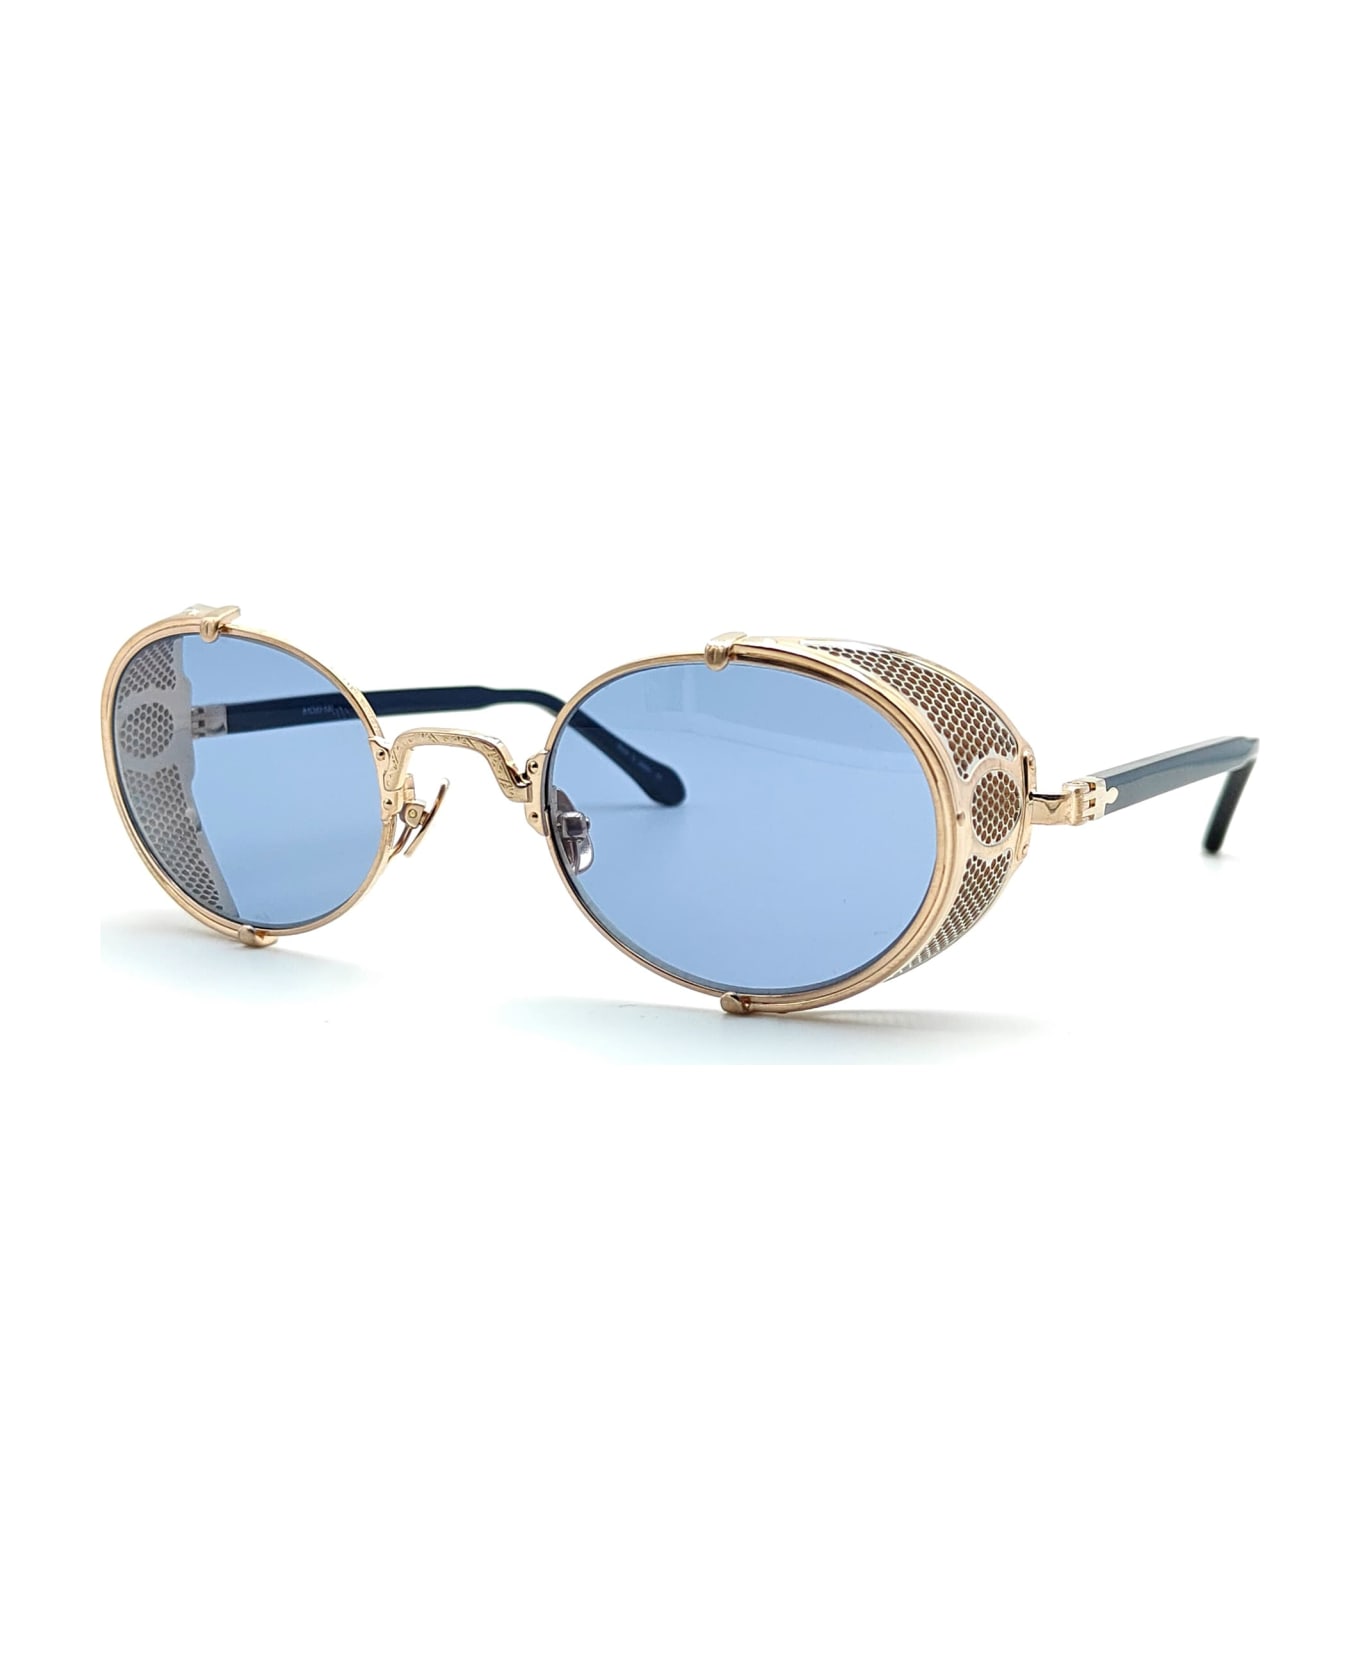 Matsuda 10610h - Brushed Gold / Black Sunglasses - Gold サングラス